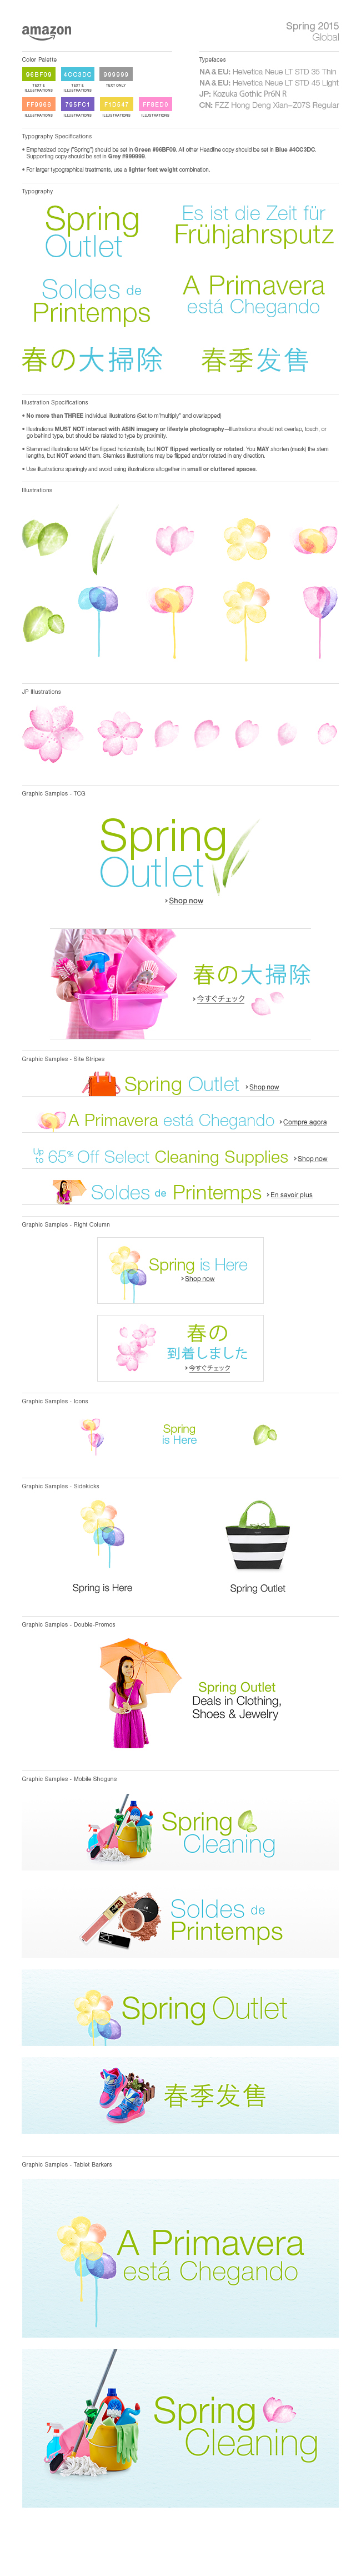 2015_spring_styleguide.jpg